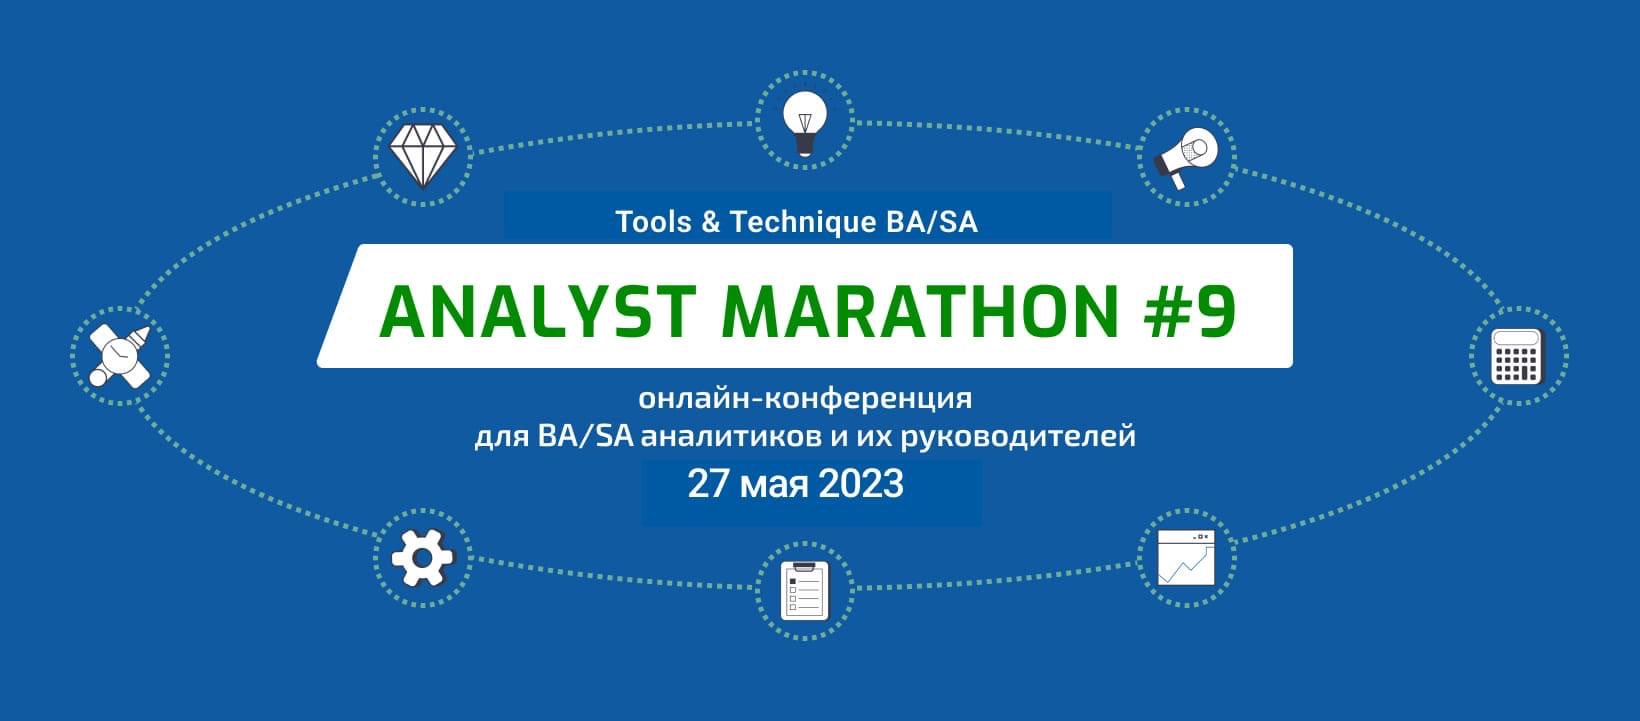 Analyst Marathon #9. TOOLS & TECHNIQUE BA/SA